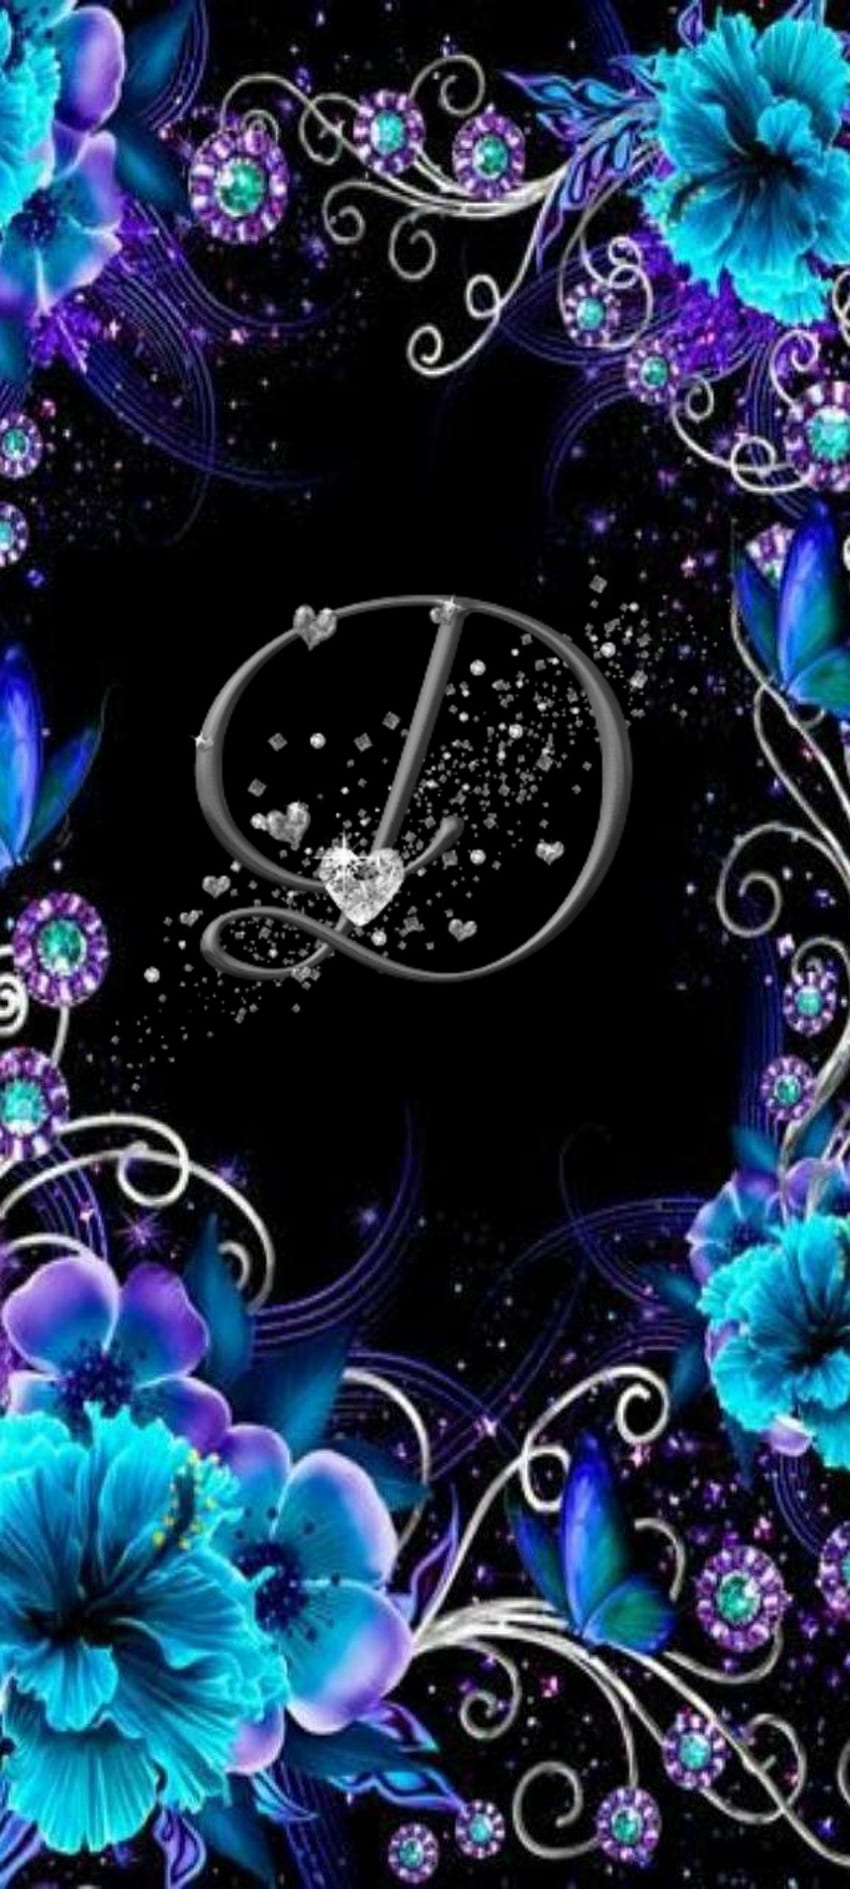 Huruf D, bunga, biru, hitam, hati, ungu, perak, imut wallpaper ponsel HD